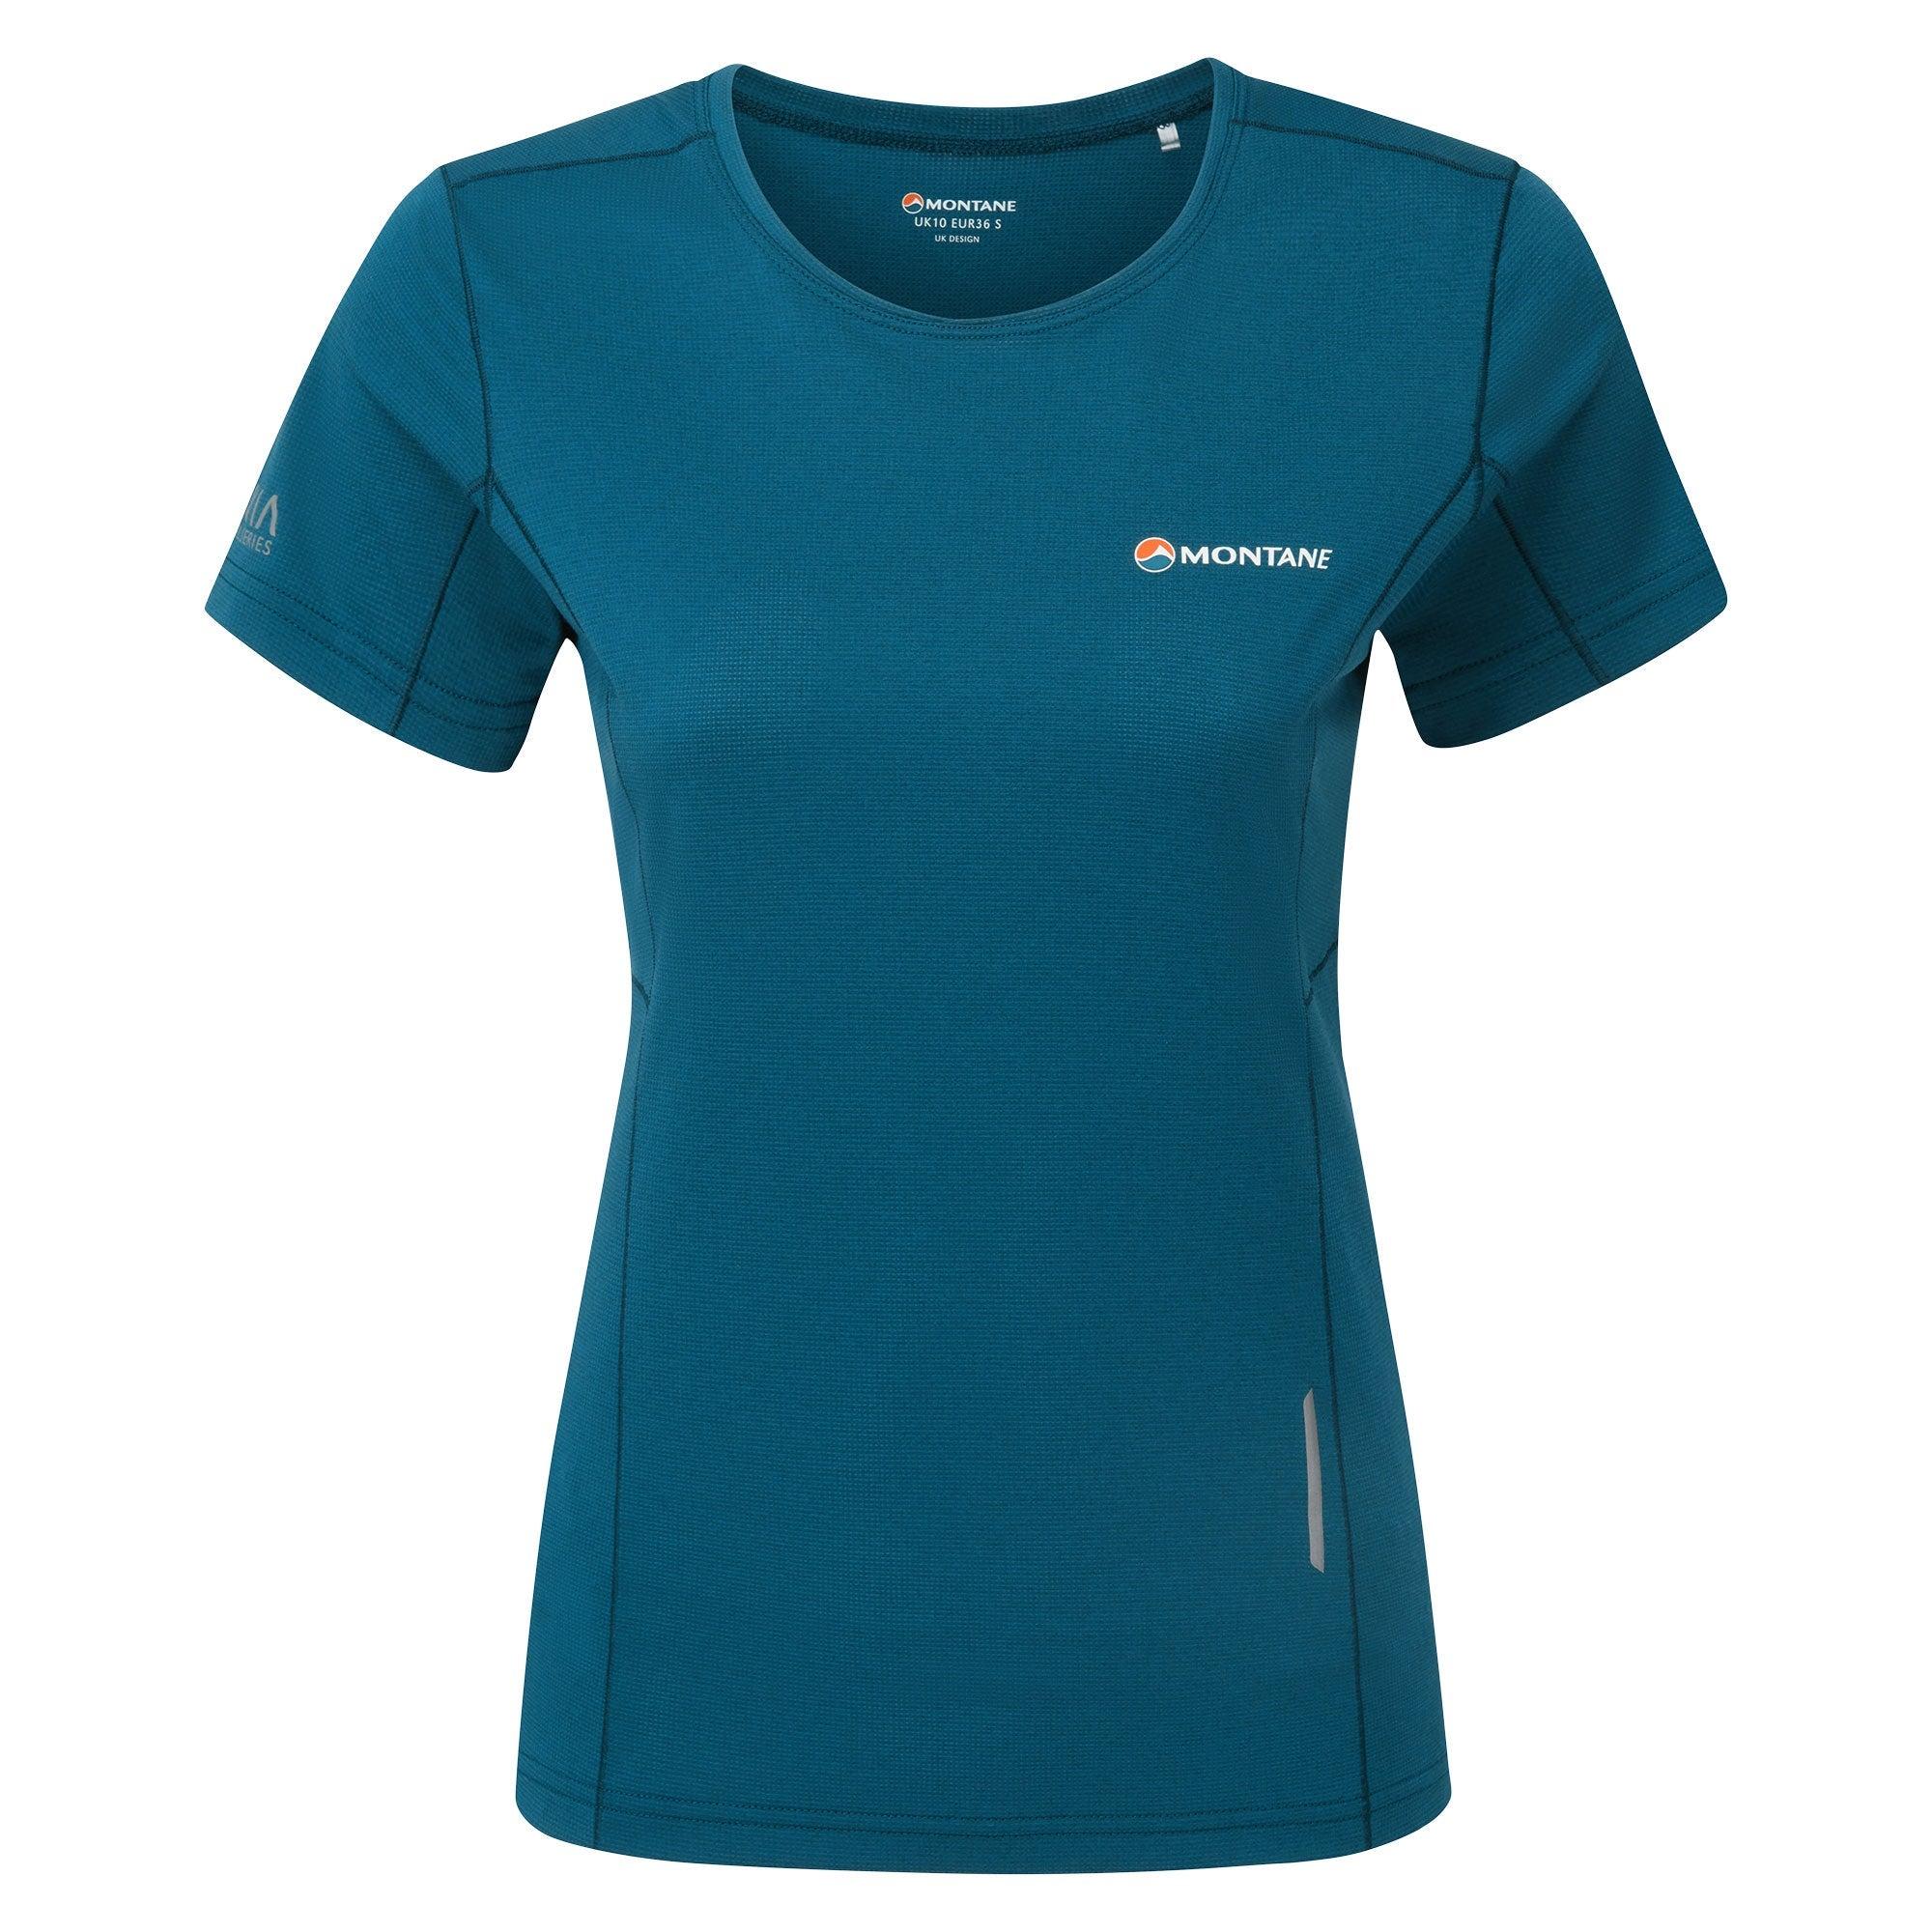 Montane Womens Blade T-shirt - Narwhal Blue